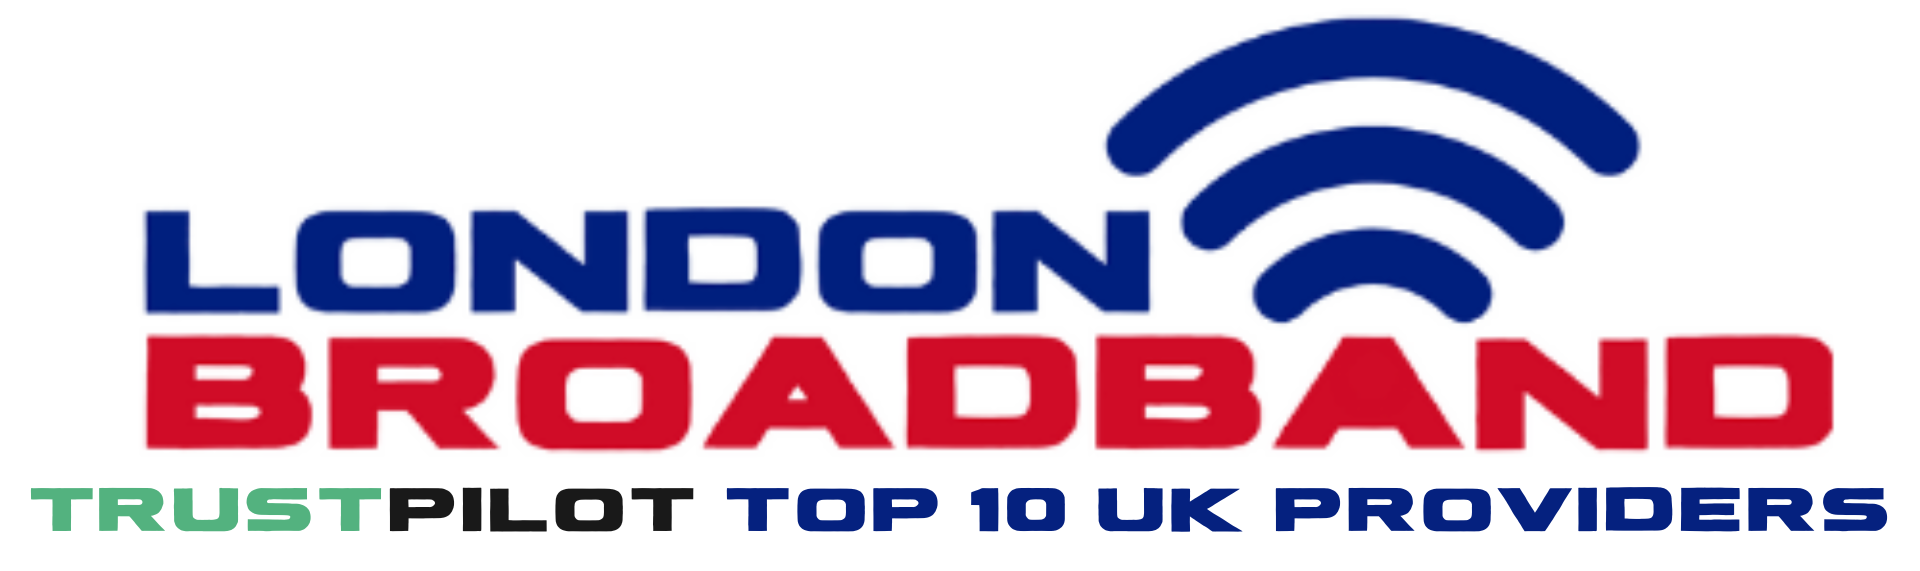 Deals for UK Customers : London Broadband